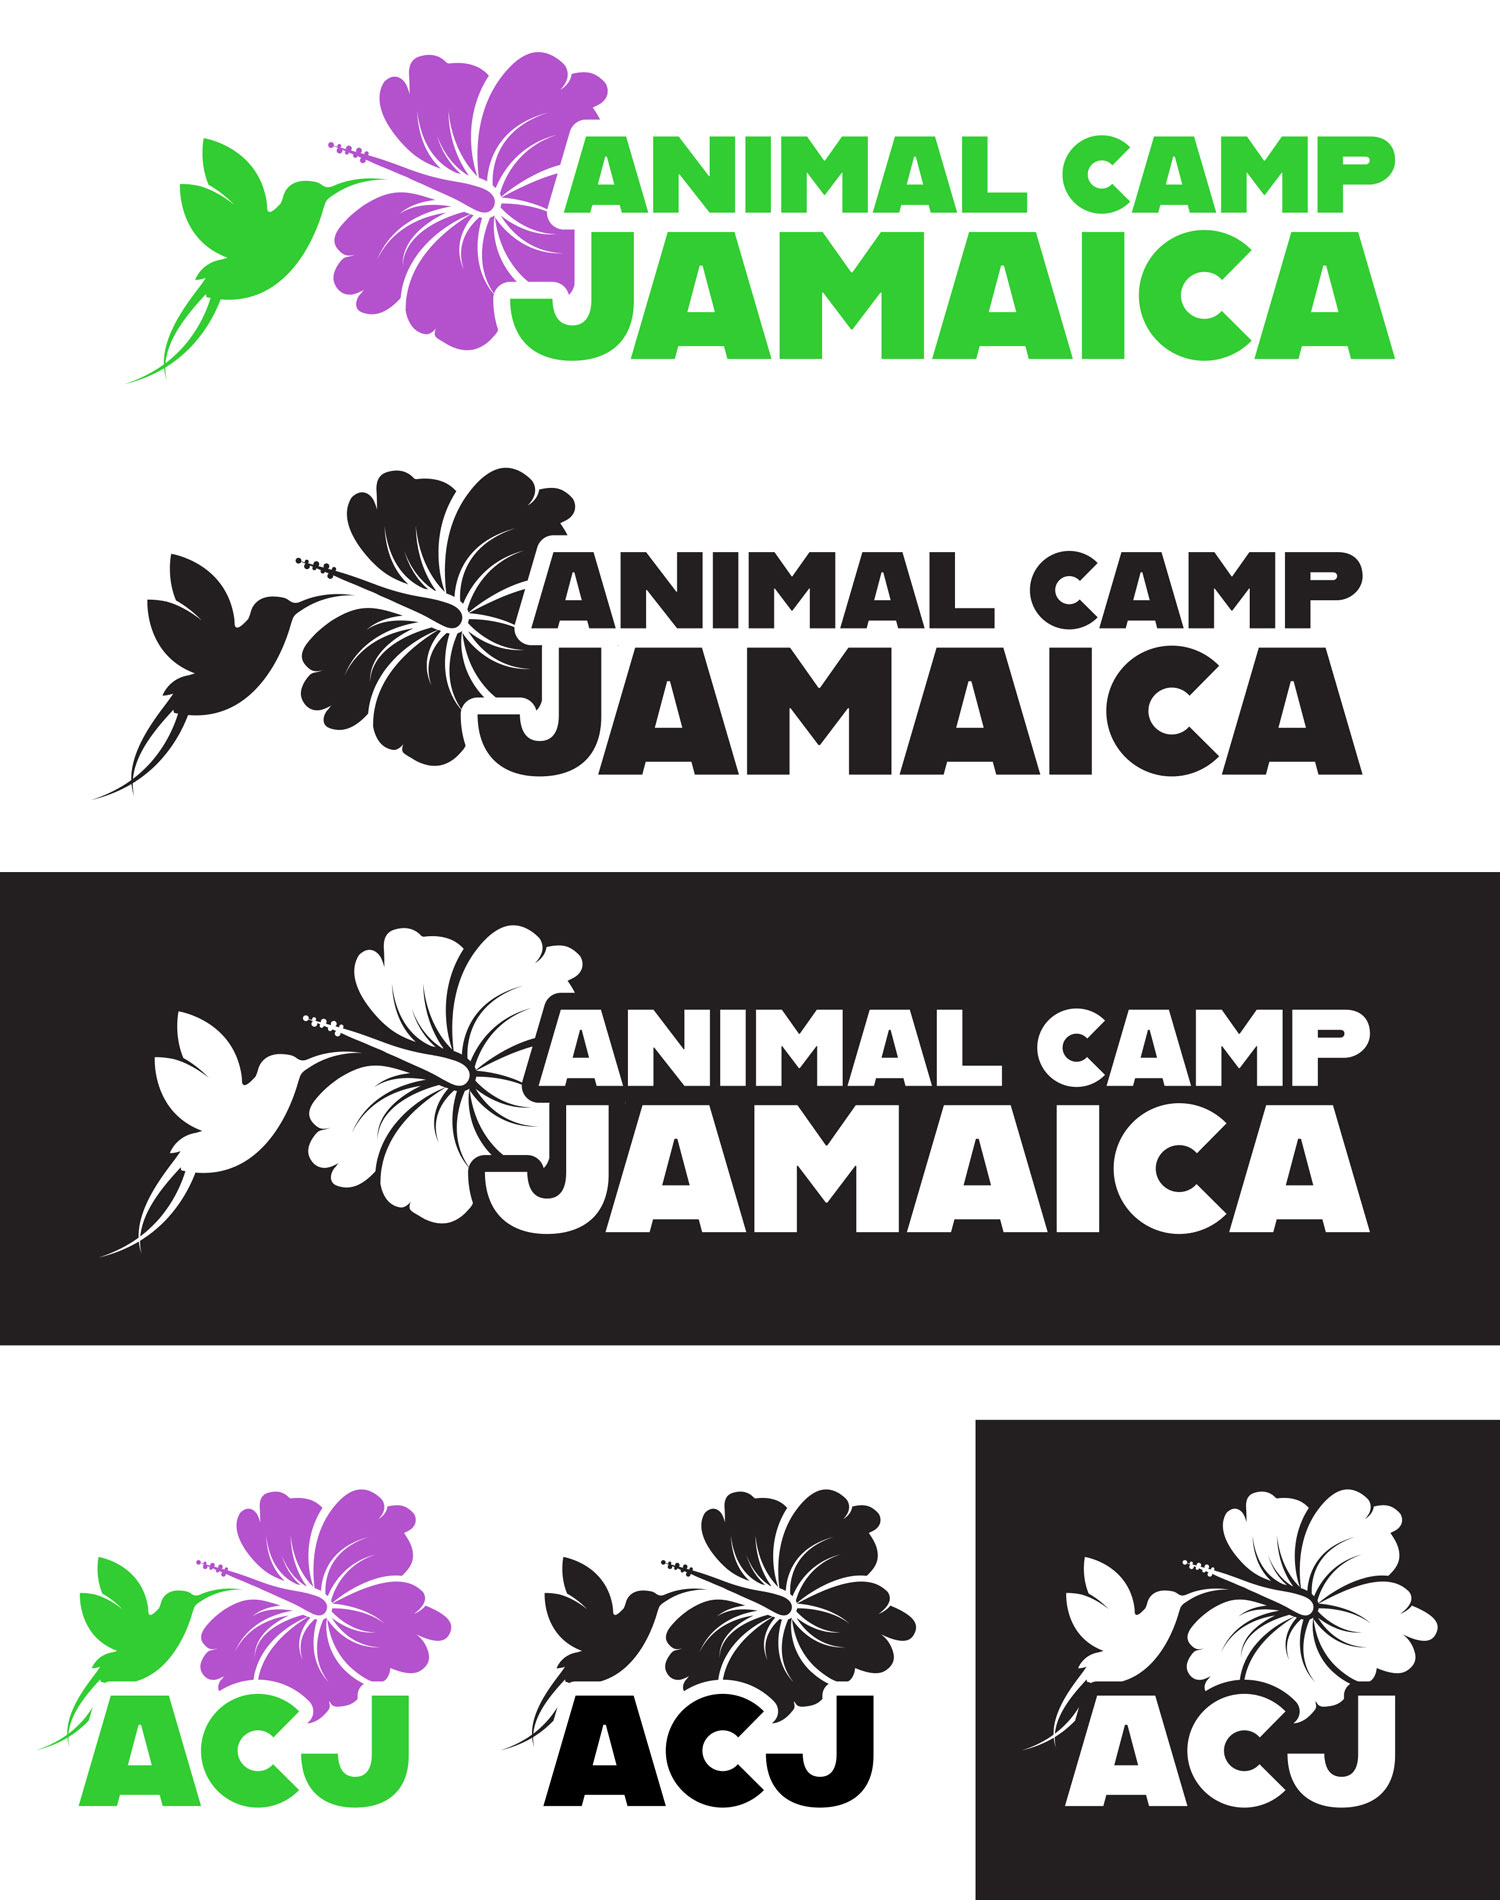 Animal Camp Jamaica - Logo Design Portfolio Image - Designs by Martin Holloway